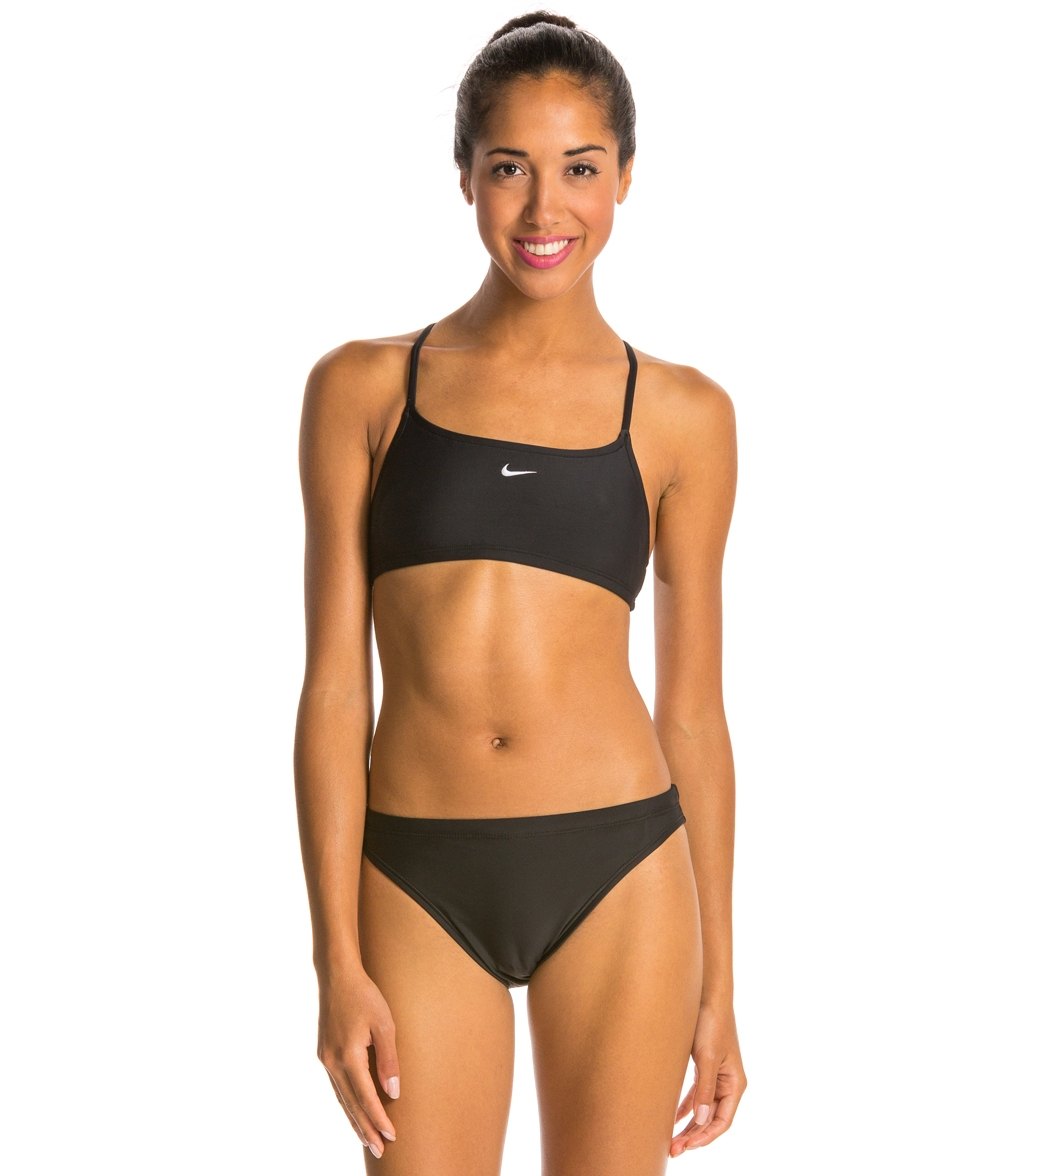 Nike Nylon Solids Sport Top Piece Swimsuit Set at SwimOutlet.com